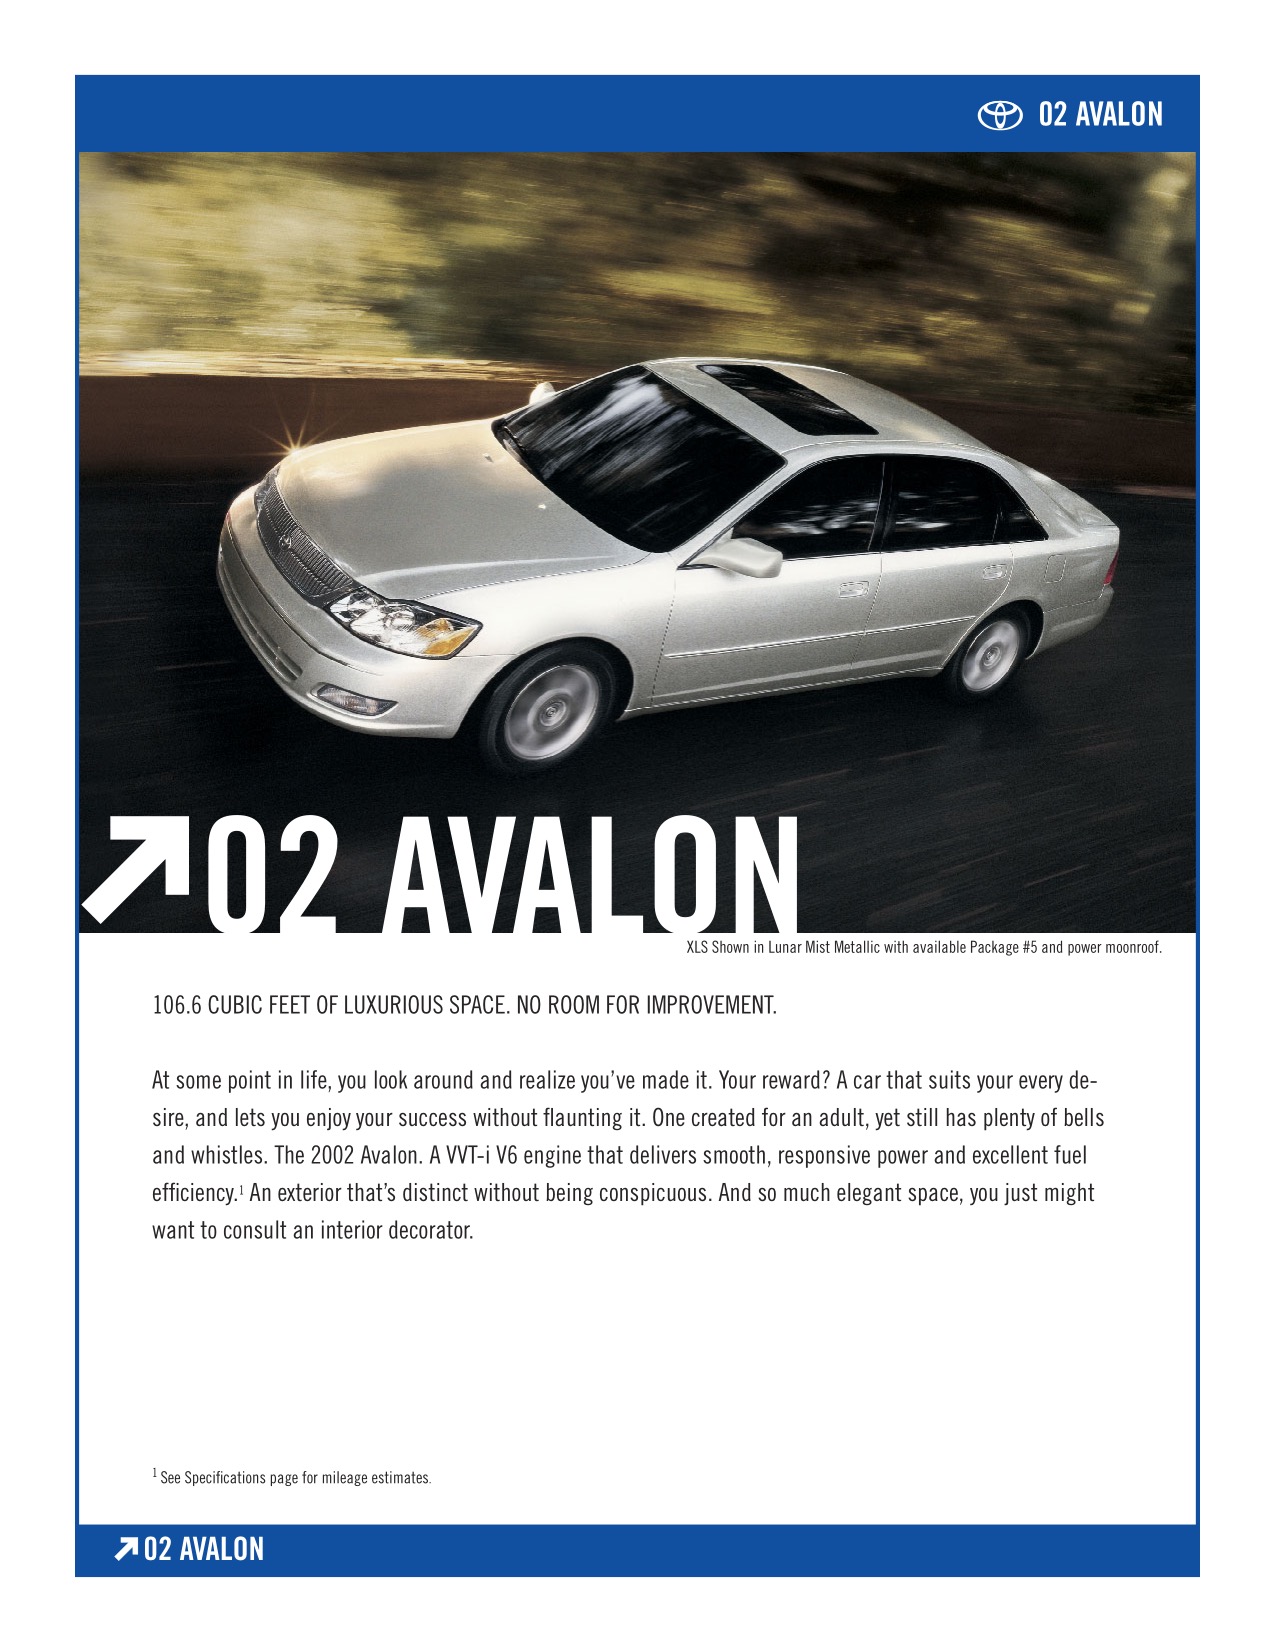 Toyota avalon brochure pdf